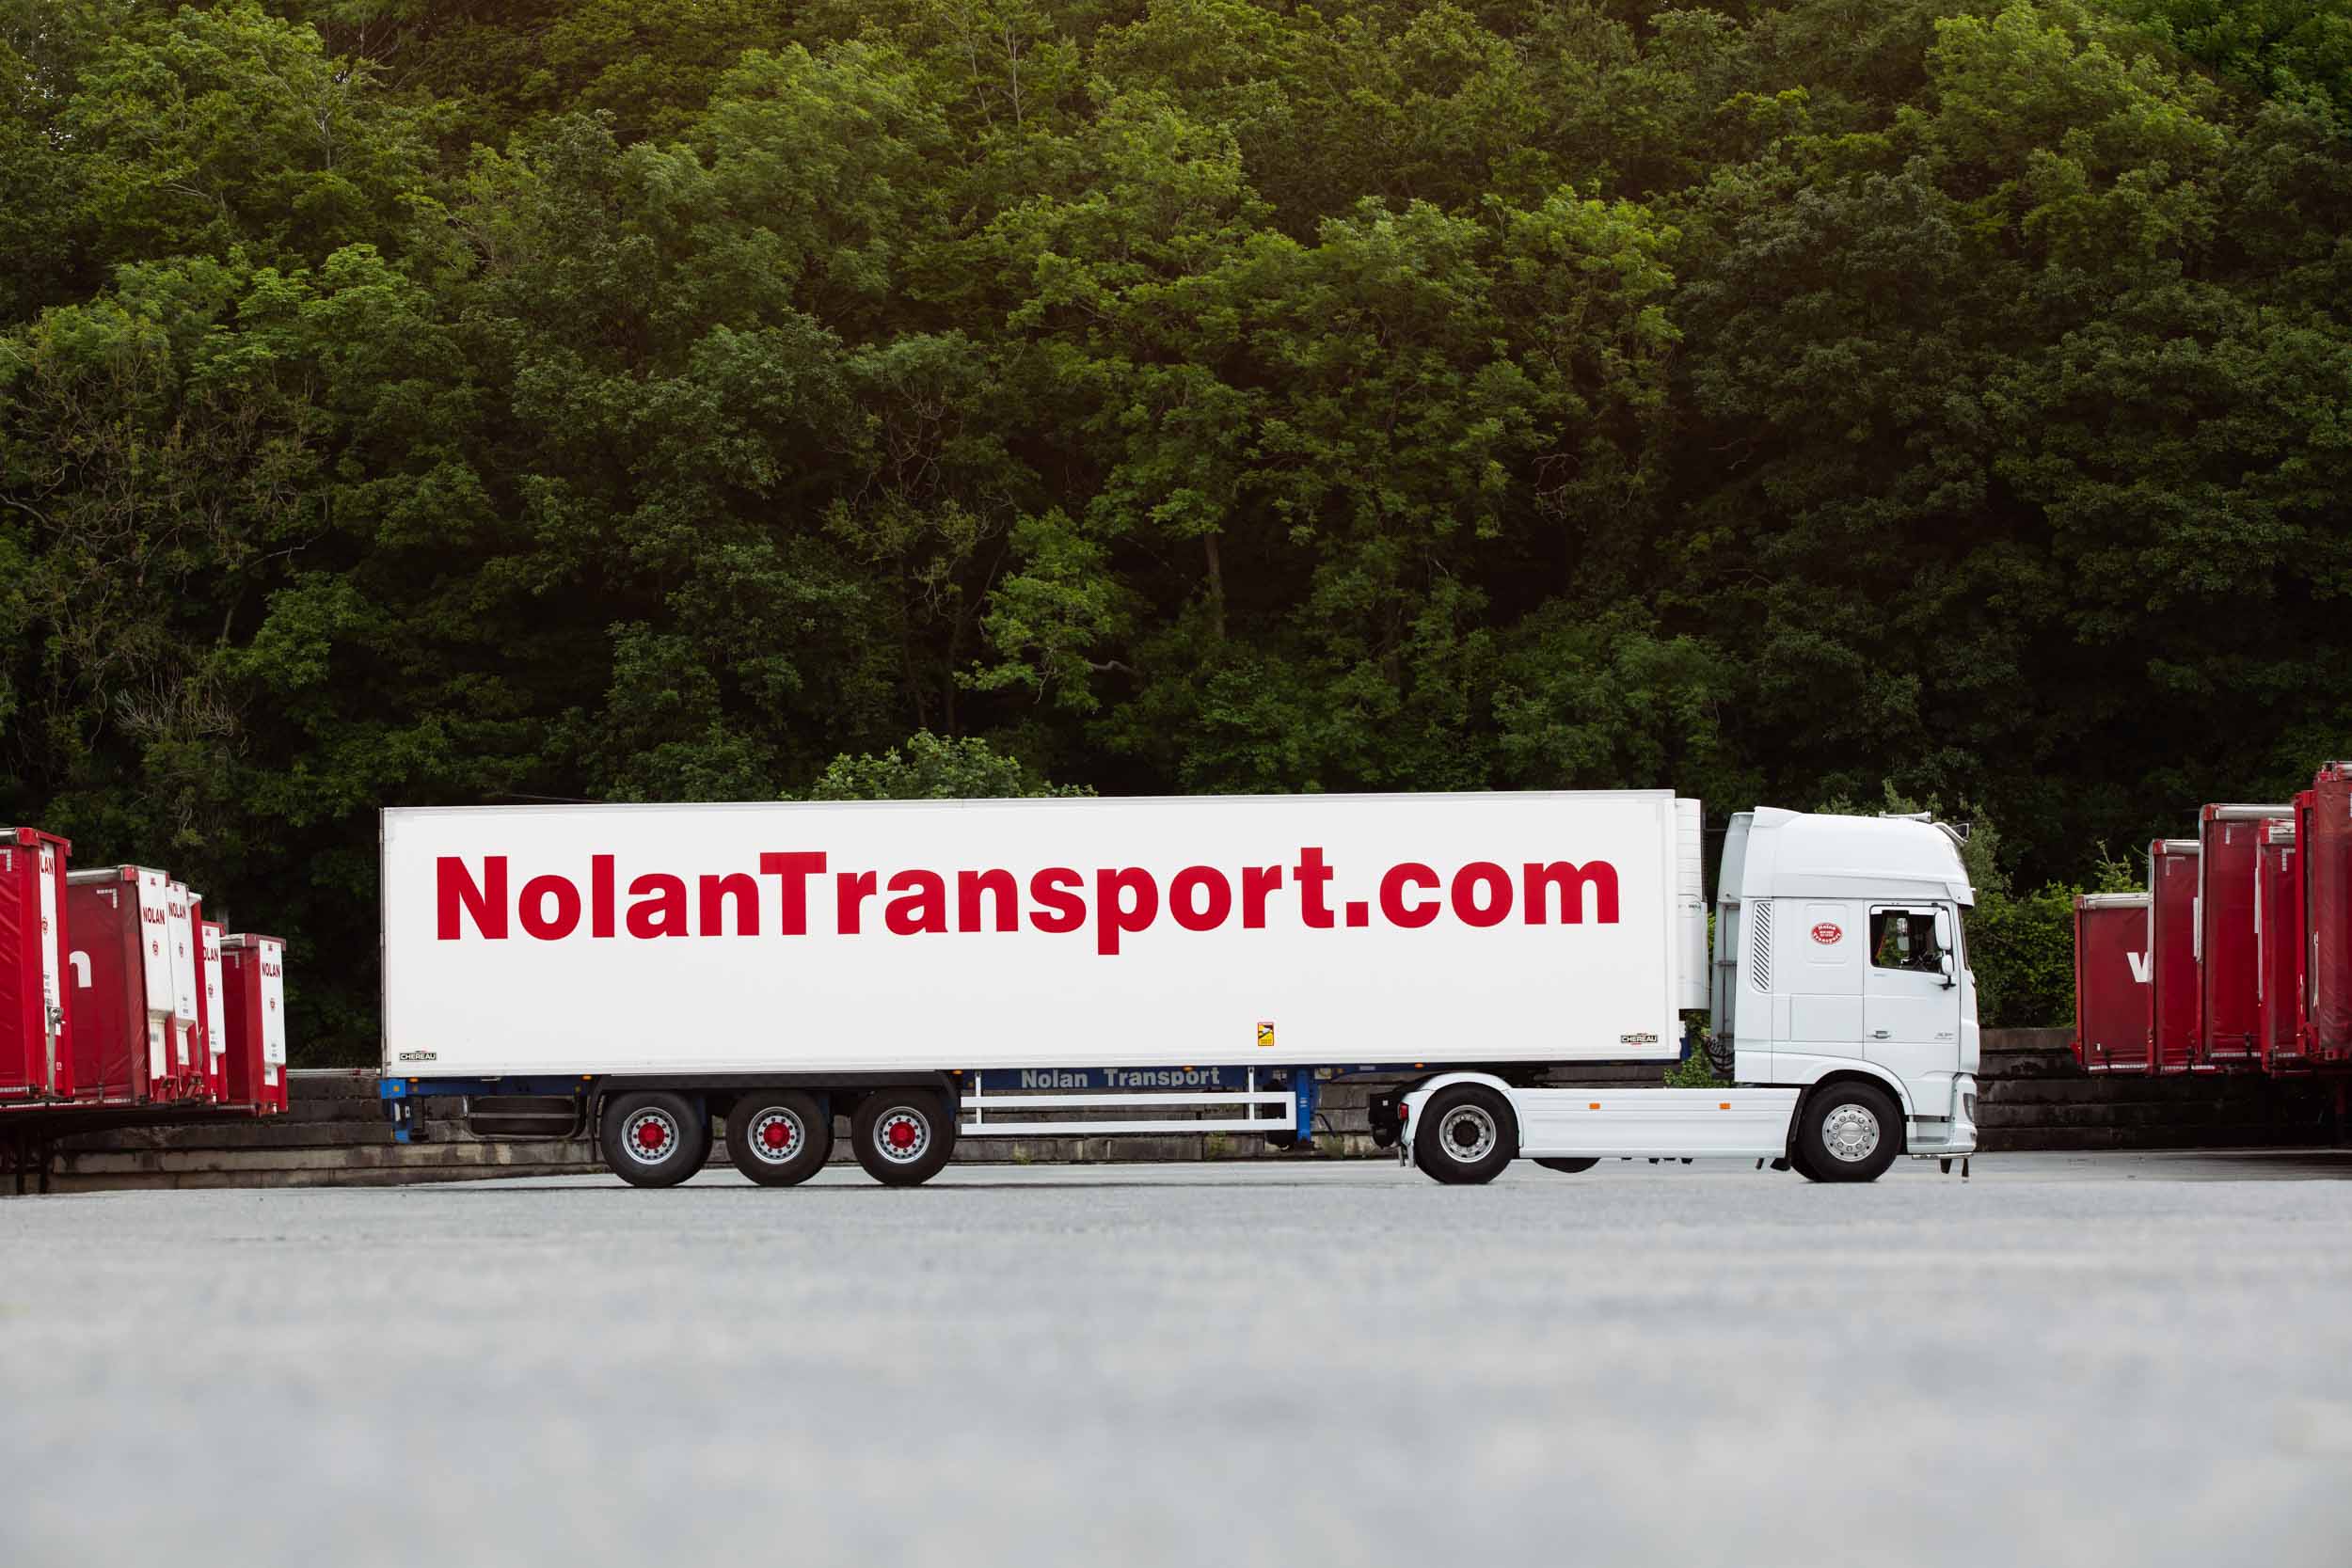 Nolan transport